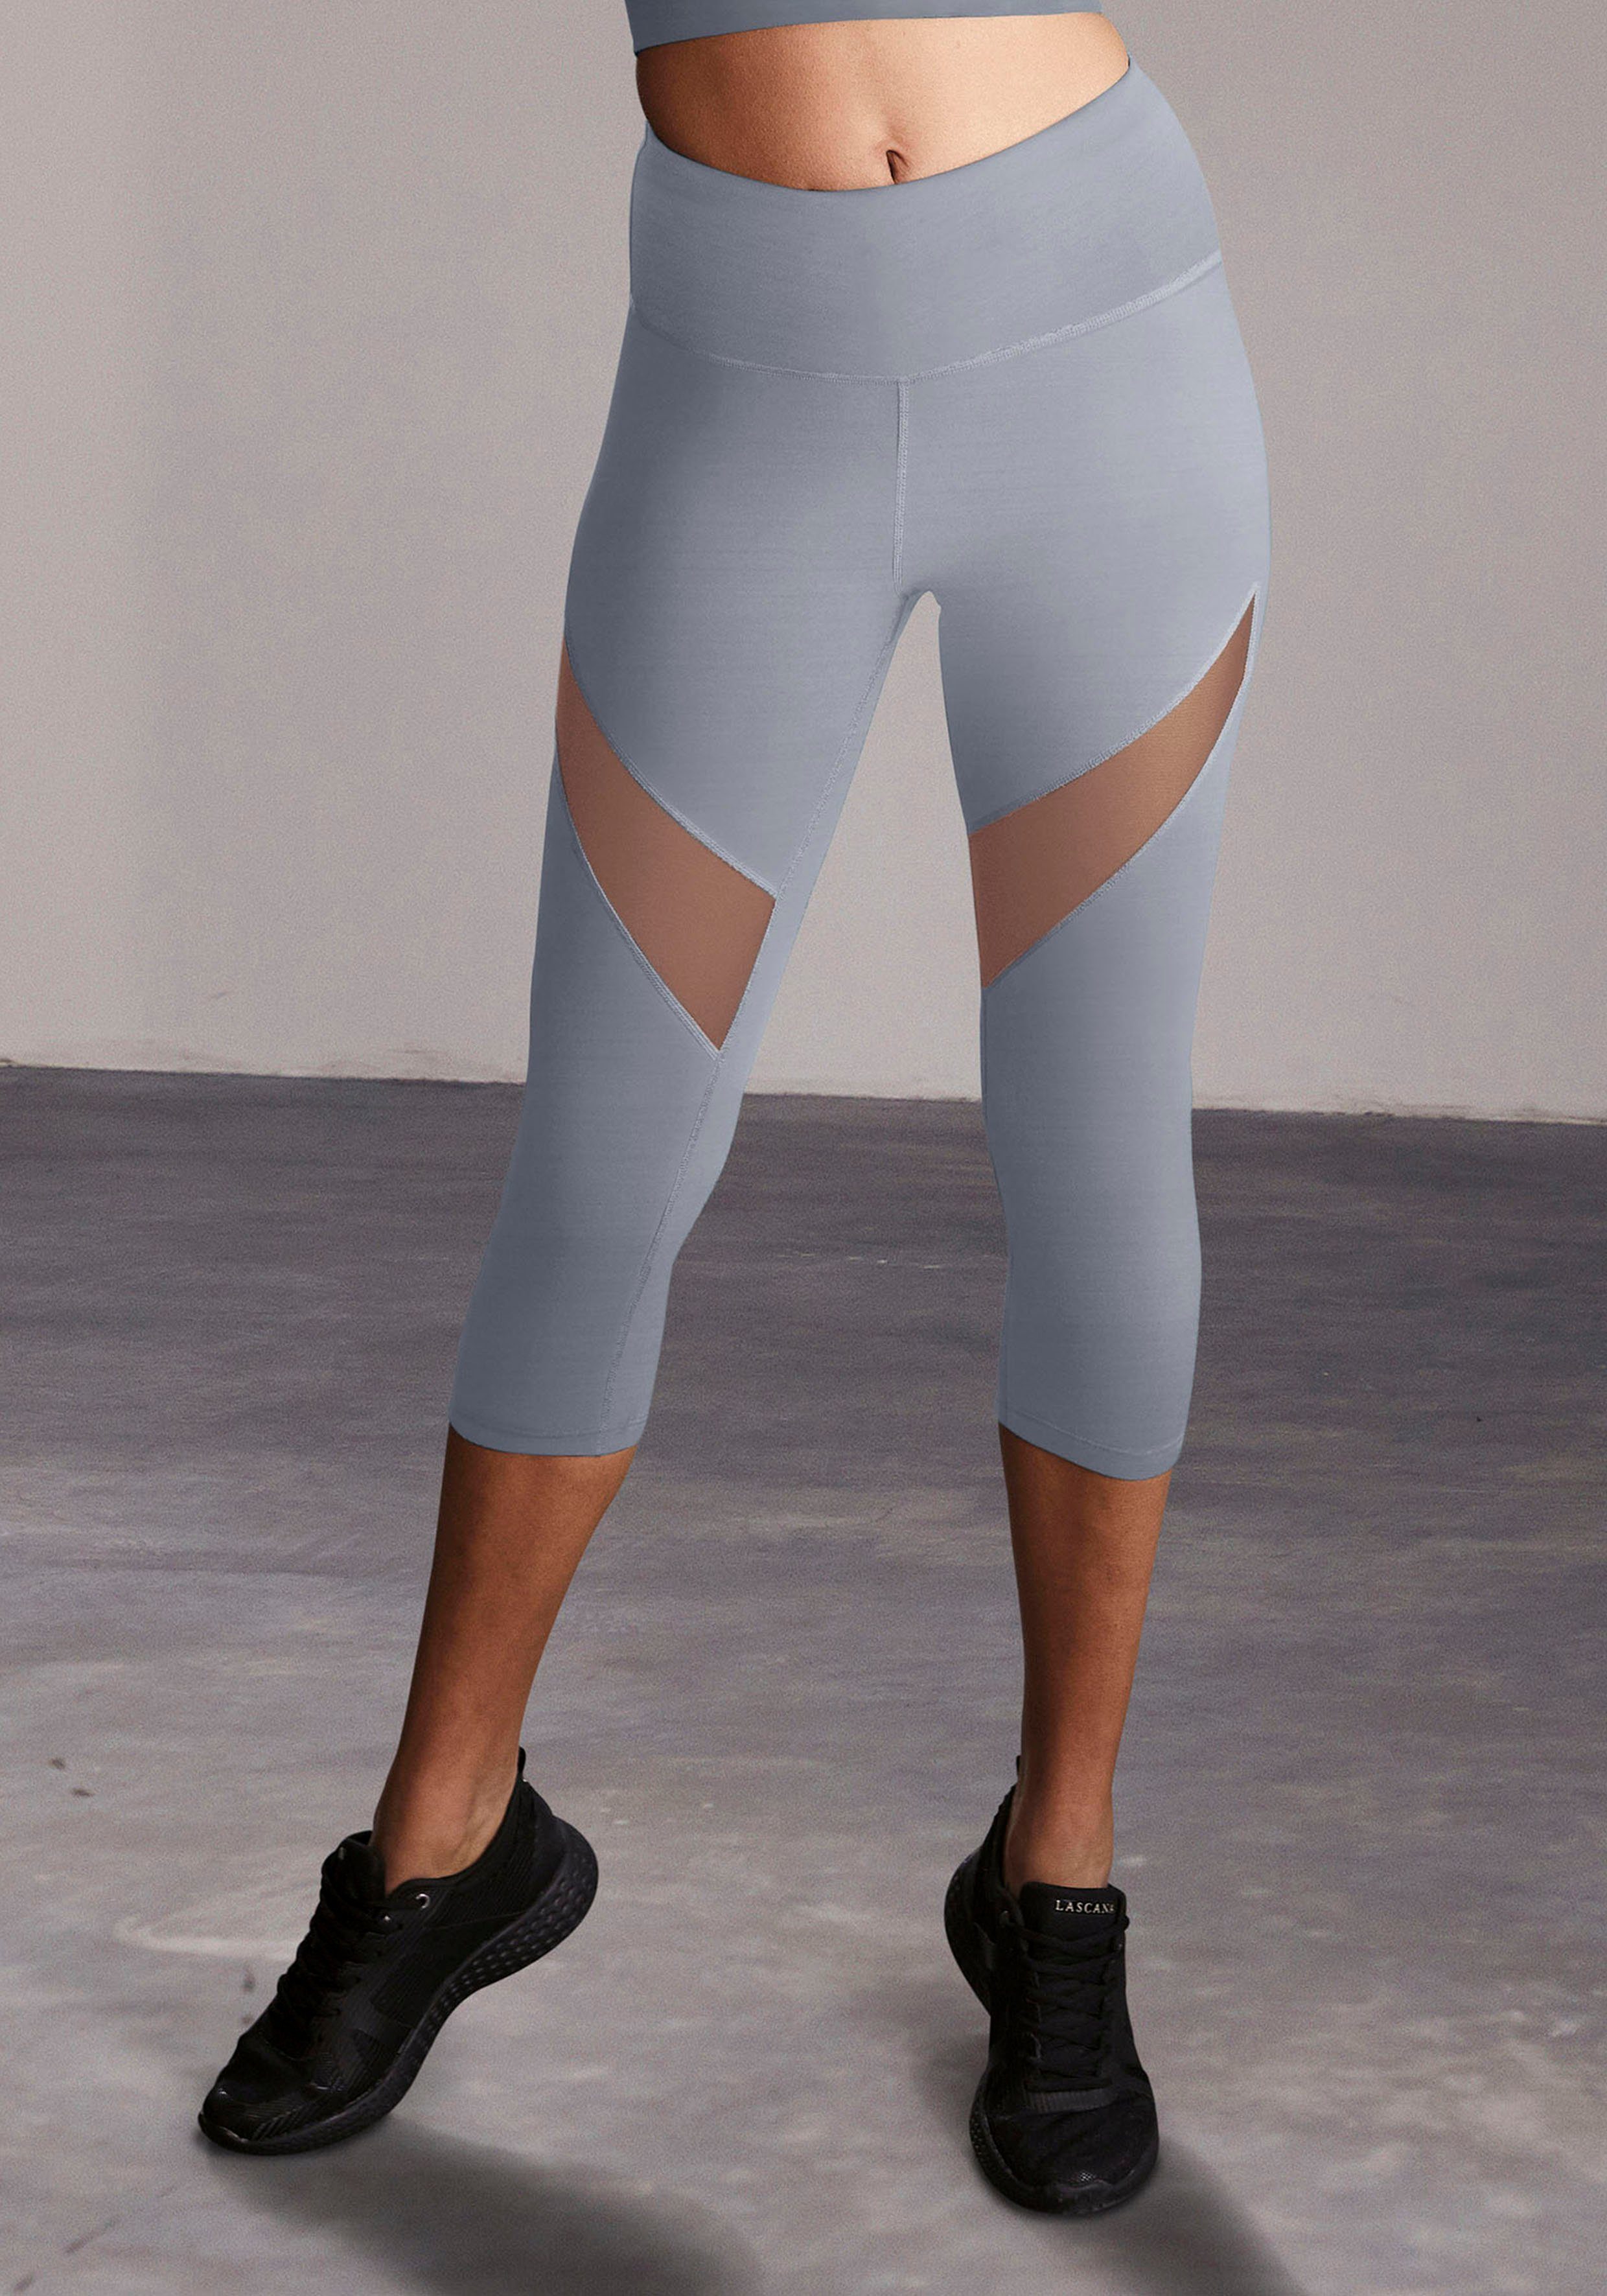 Caprileggings -Sport LASCANA Loungewear grau mit kleiner ACTIVE Raffung, Capri blau